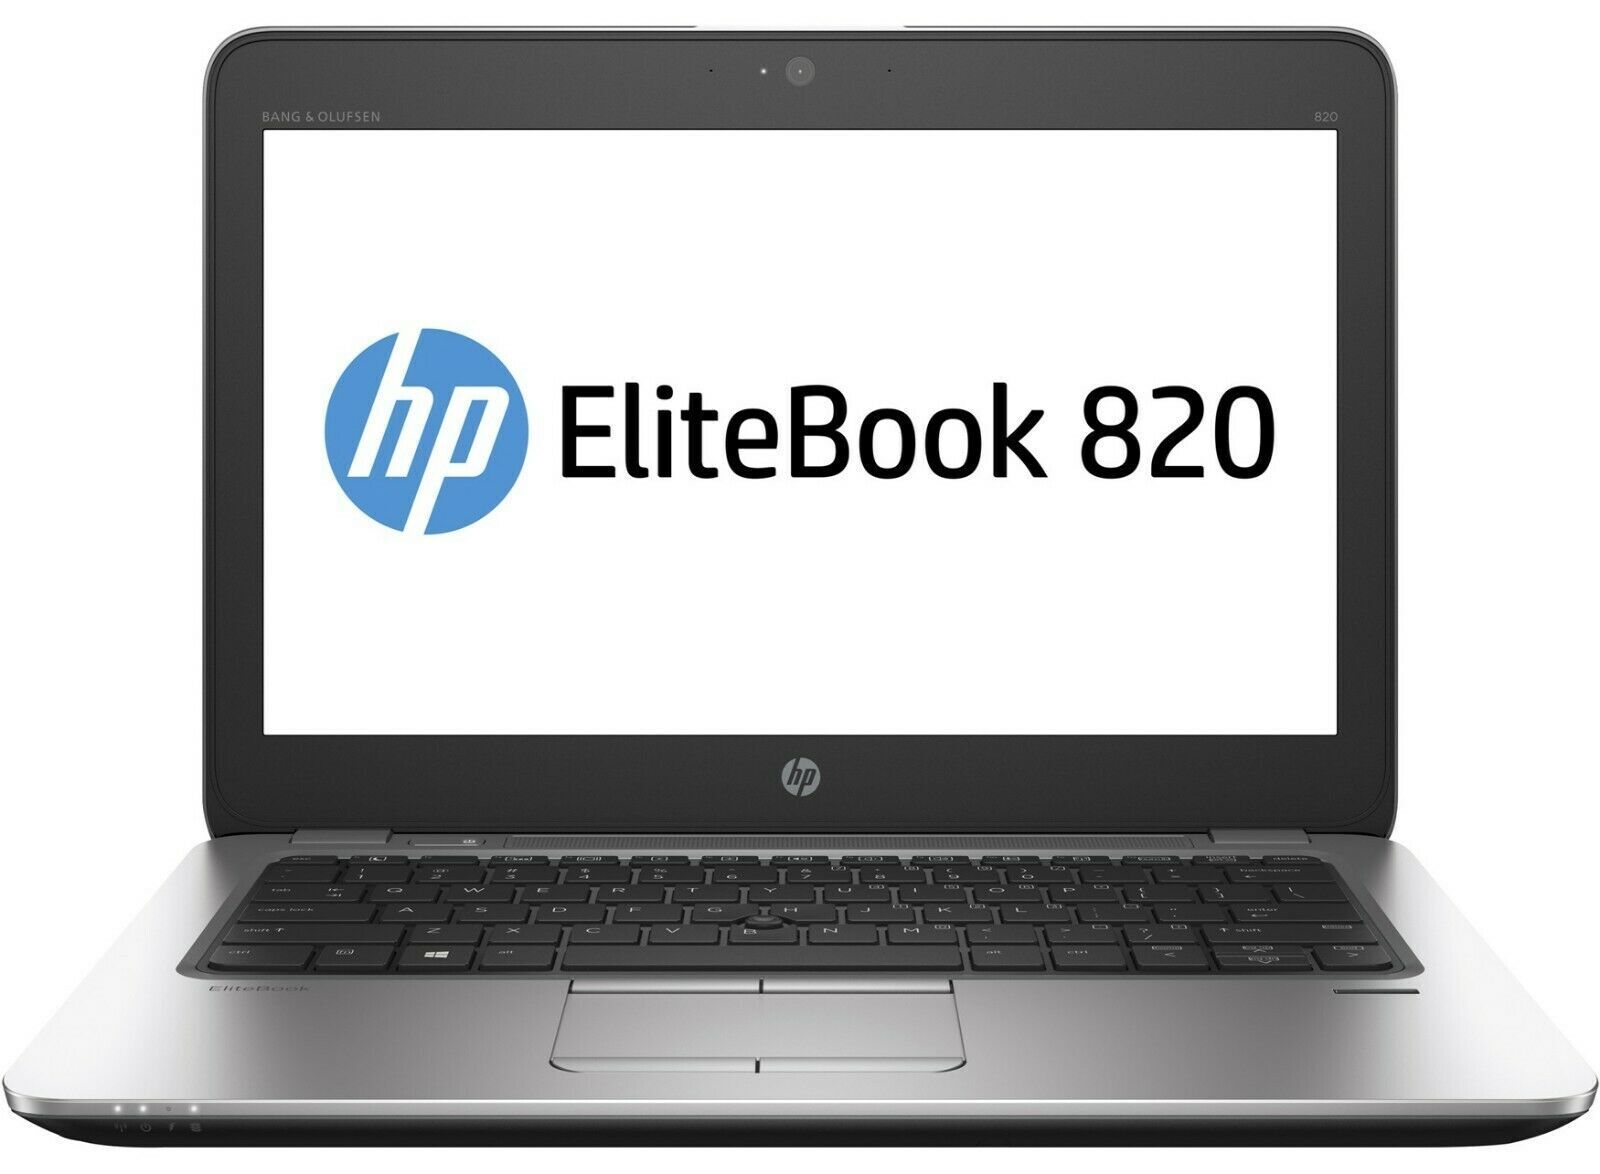 HP EliteBook 820 G3 Intel i7 6600U 2.60Ghz 16GB RAM 1TB HDD 12.5" Win 10 - B Grade Full Size Image